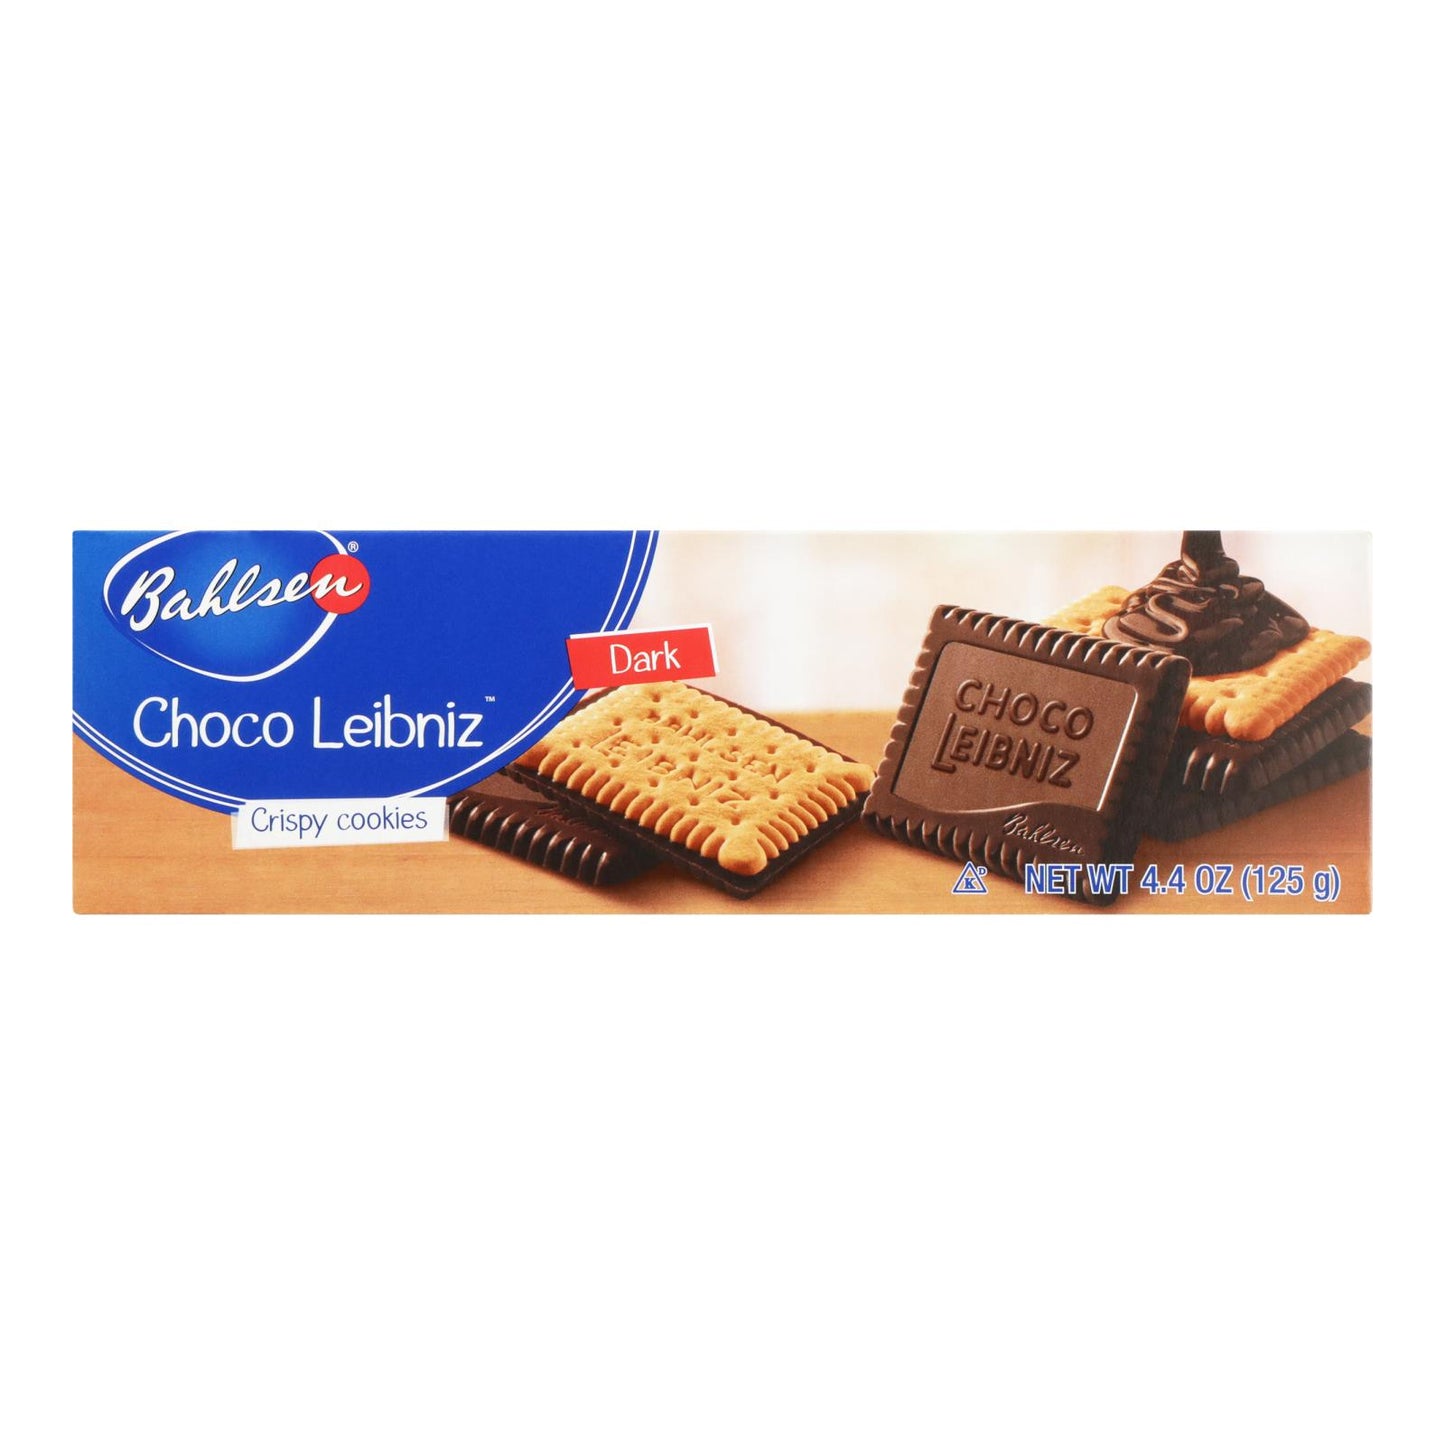 Bahlsen Choco Leibniz Butter And Dark Chocolate - Case Of 12 - 4.4 Oz.